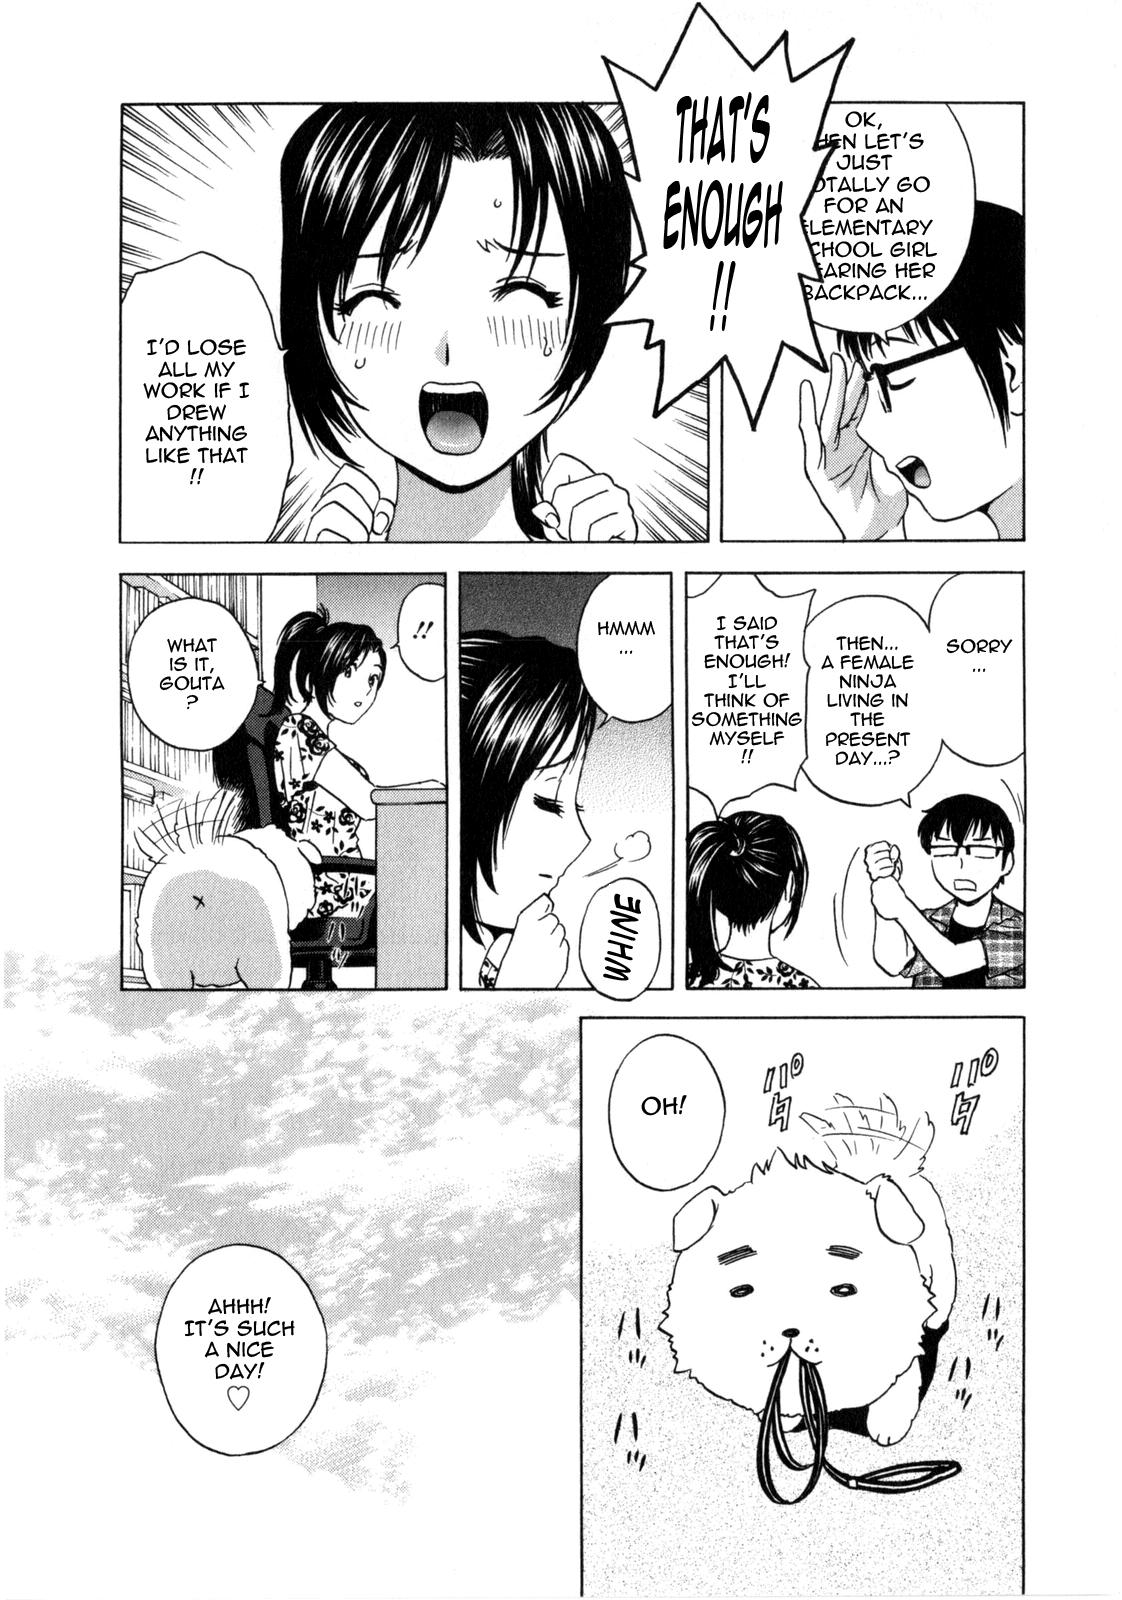 Life with Married Women Just Like a Manga 1 138